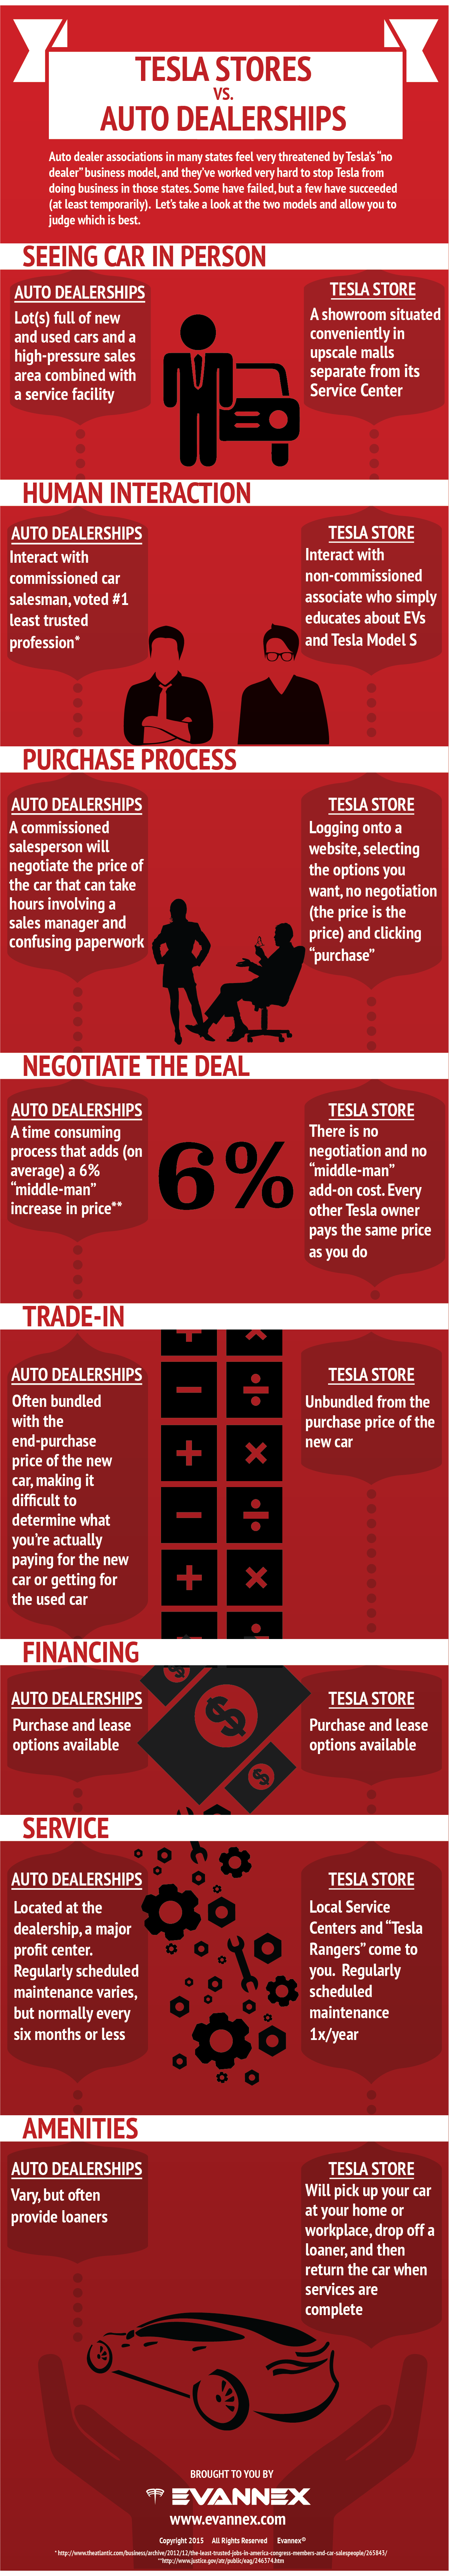 Tesla-Stores-vs-Auto-Dealerships